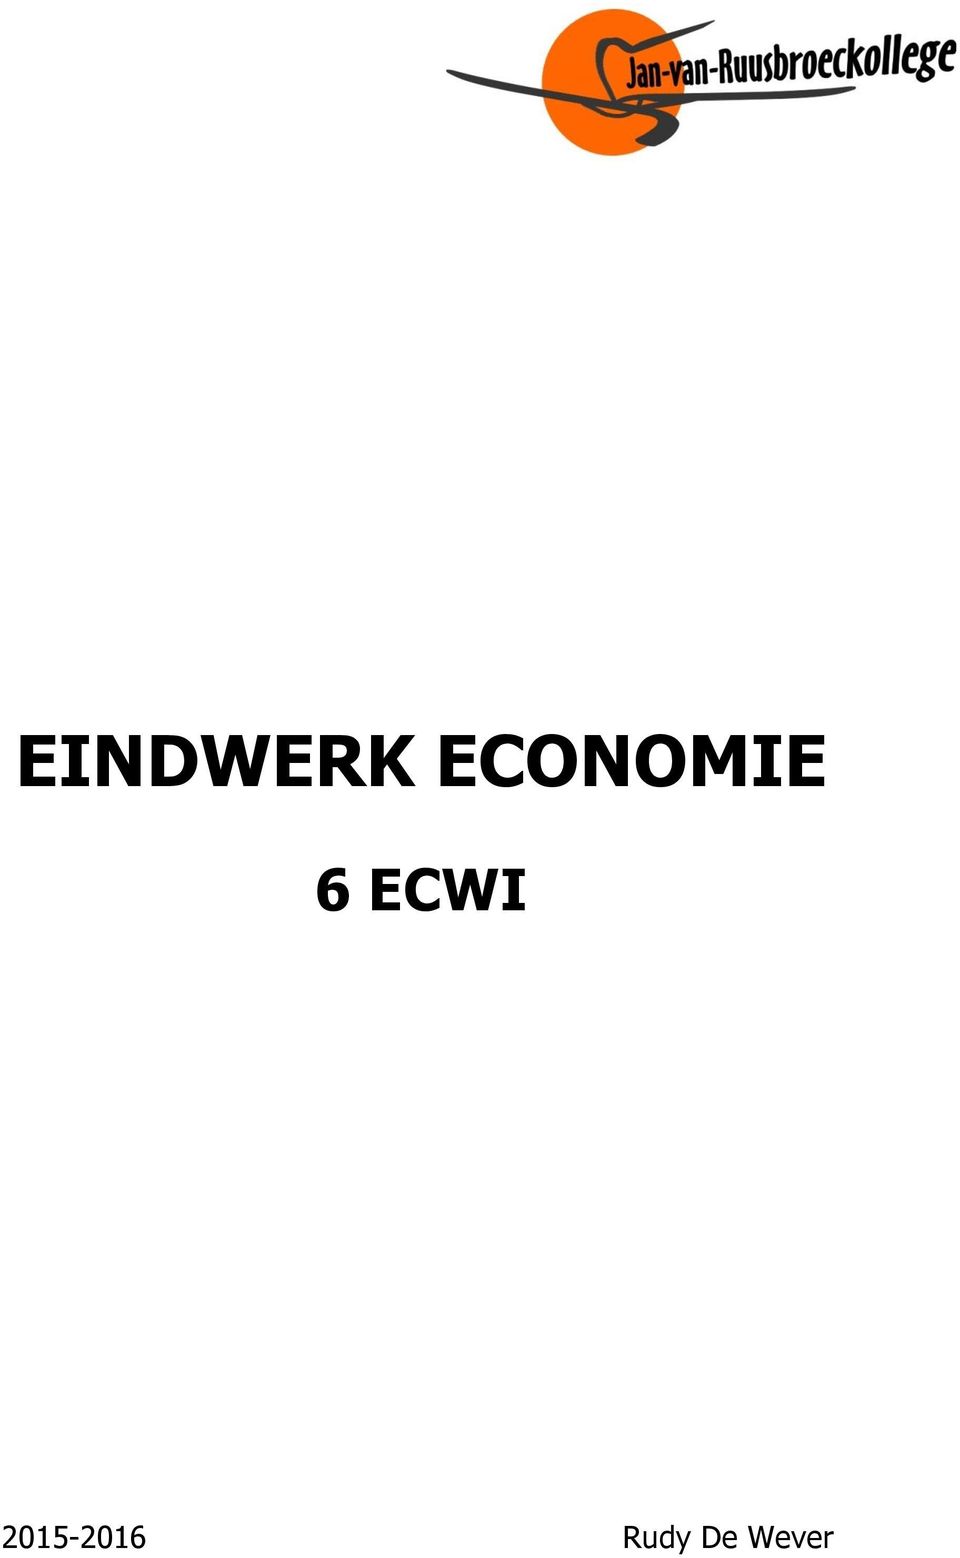 ECWI